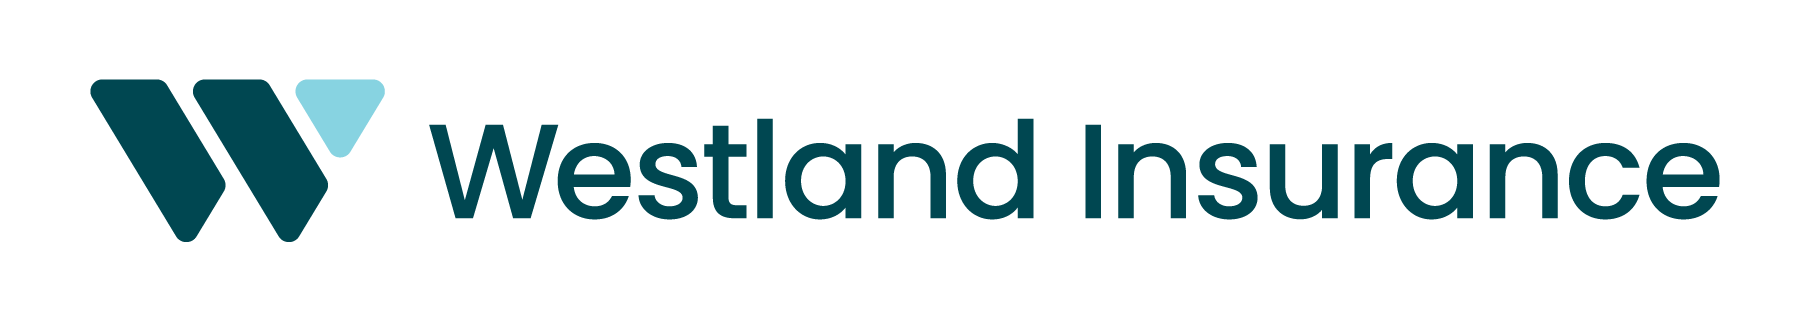 westland insurance logo